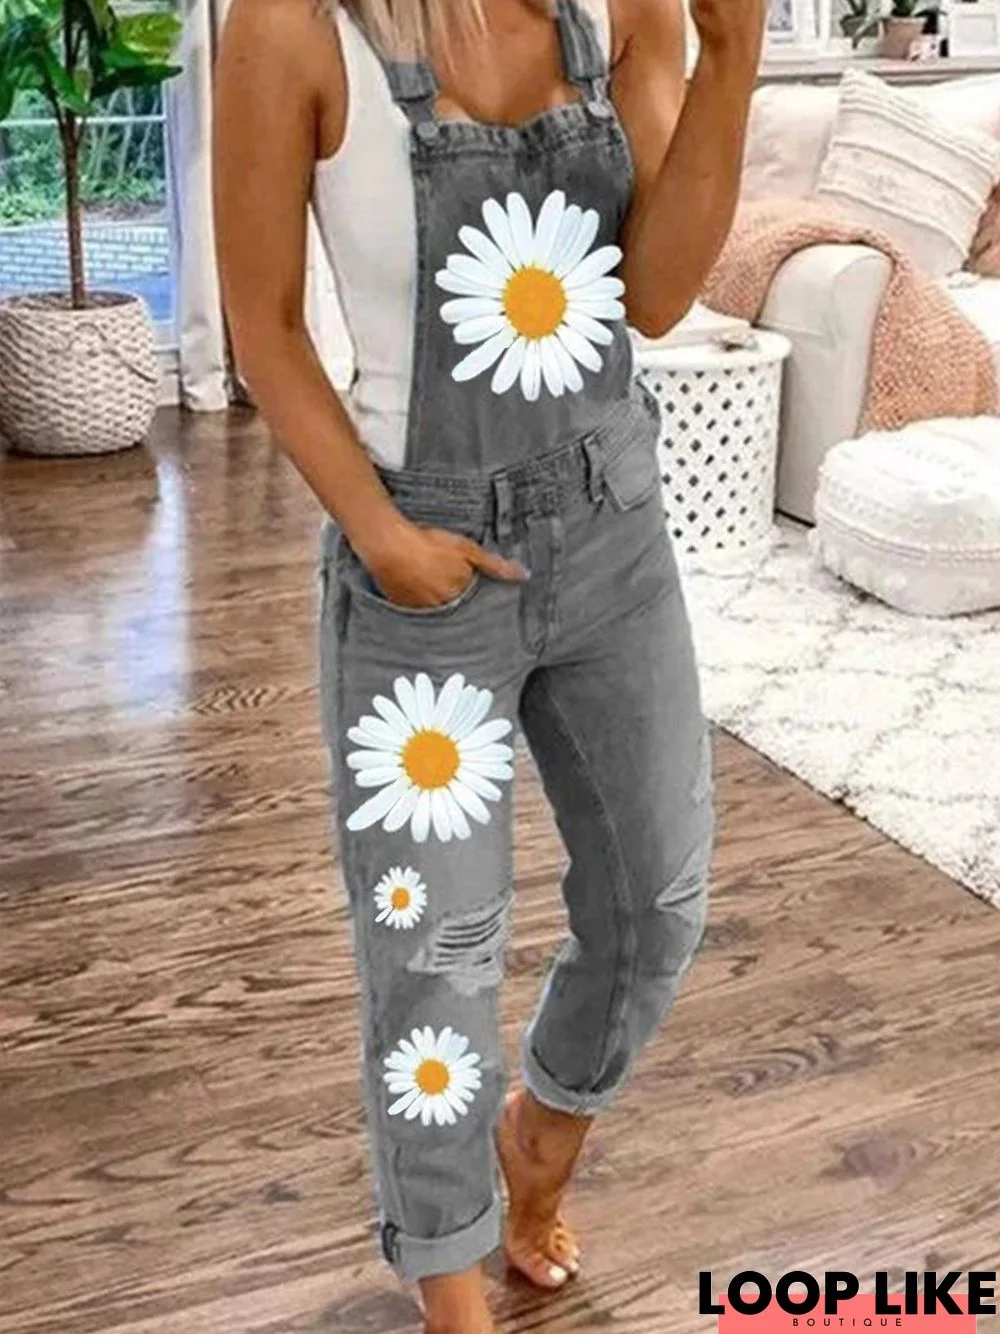 Denim Casual Plus Size Daisy Floral Printed Overalls Jumpsuit Jumpsuit & Romper